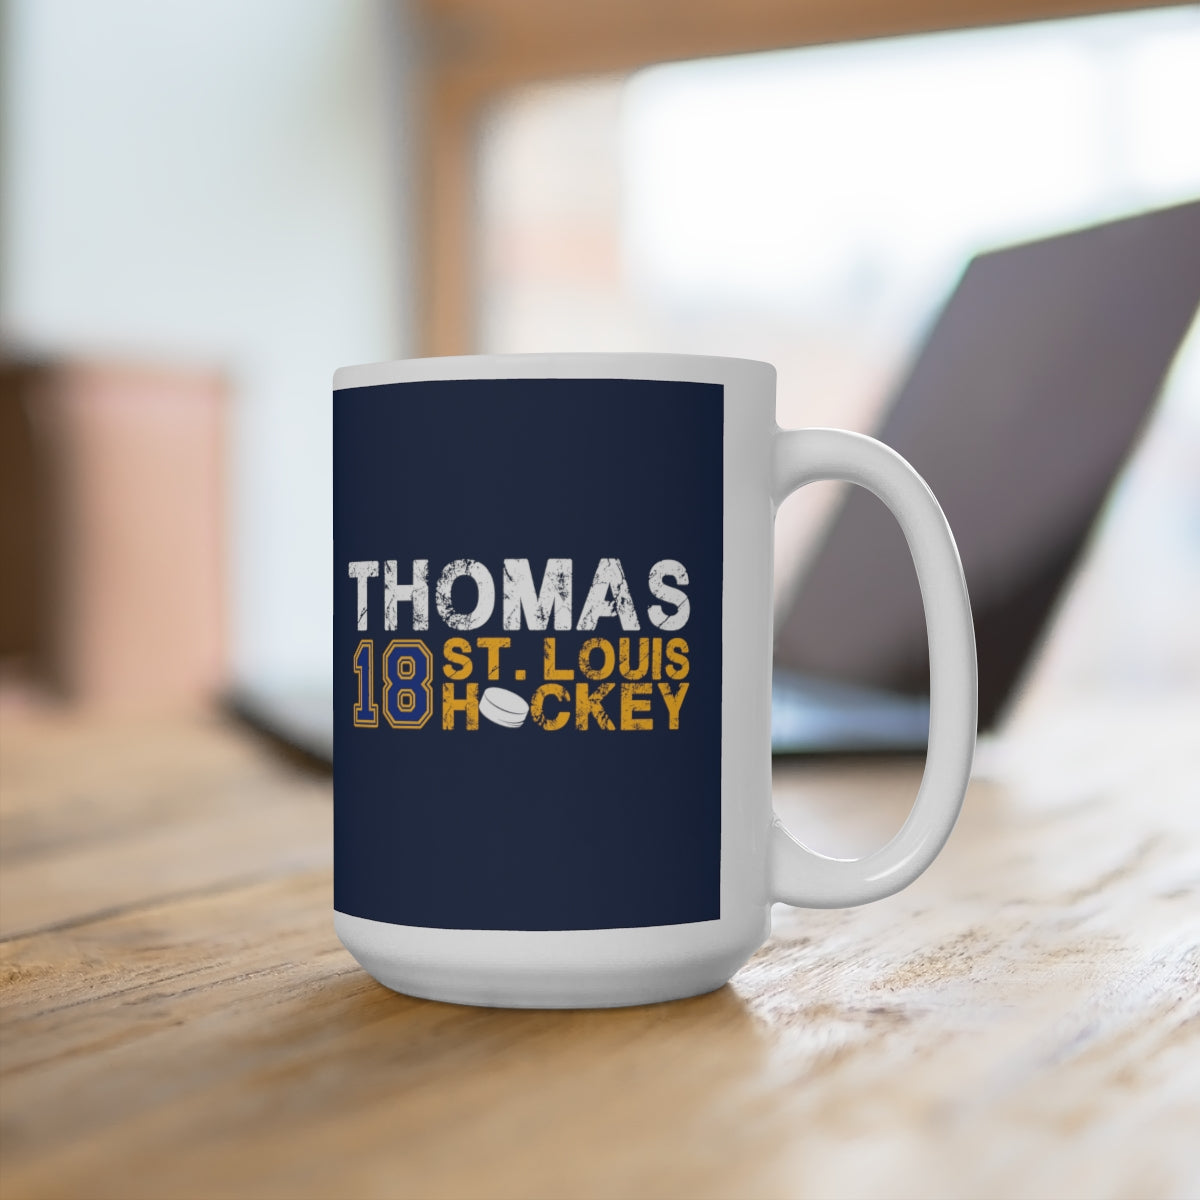 Thomas 18 St. Louis Hockey Ceramic Coffee Mug In Navy, 15oz